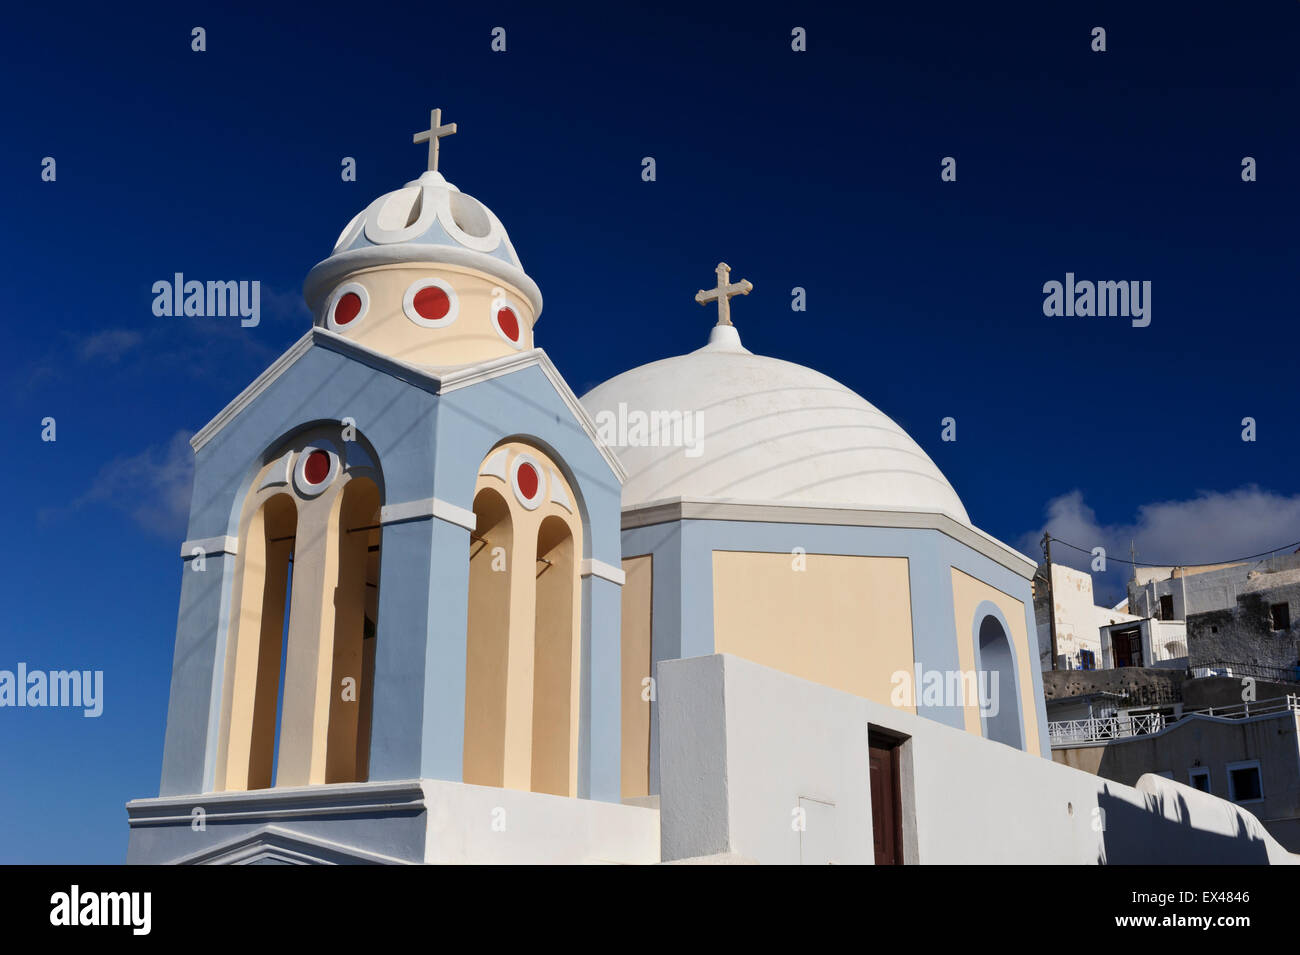 A colourful Greek church of Saint Stylianos, Firostefani, Santorini, Greece. Stock Photo